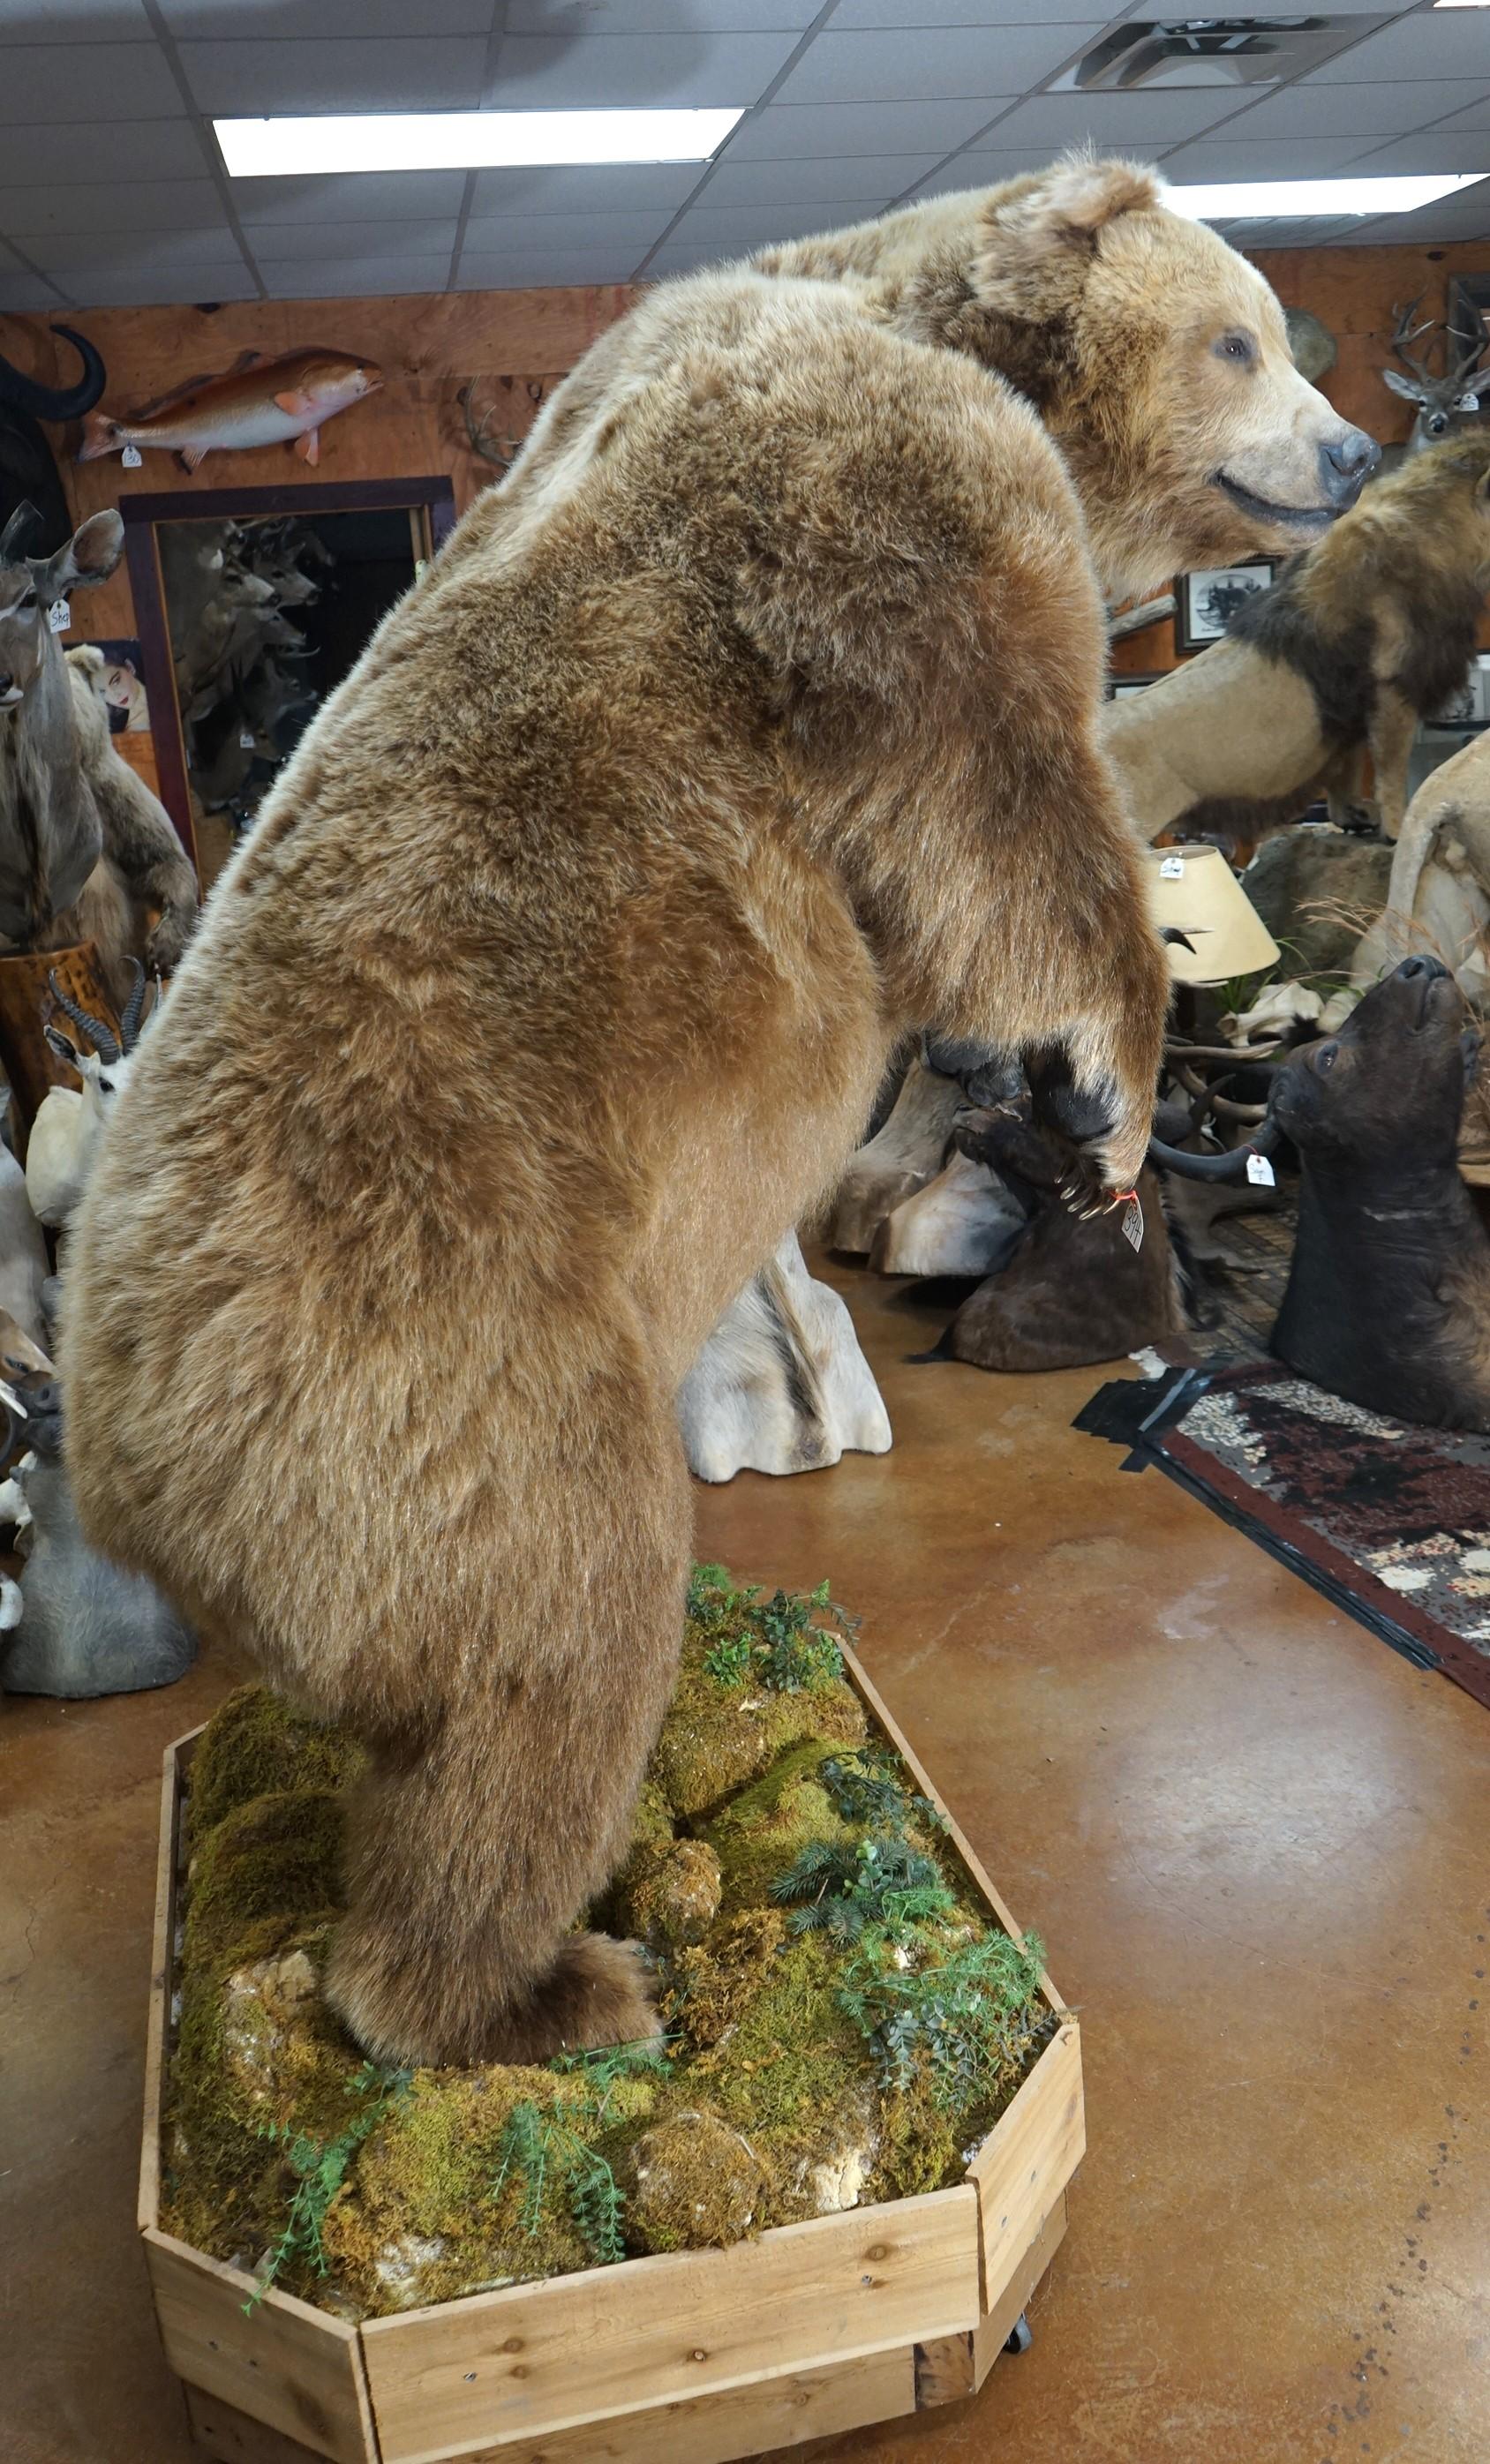 Alaskan Brown Bear Full Body Taxidermy Mount